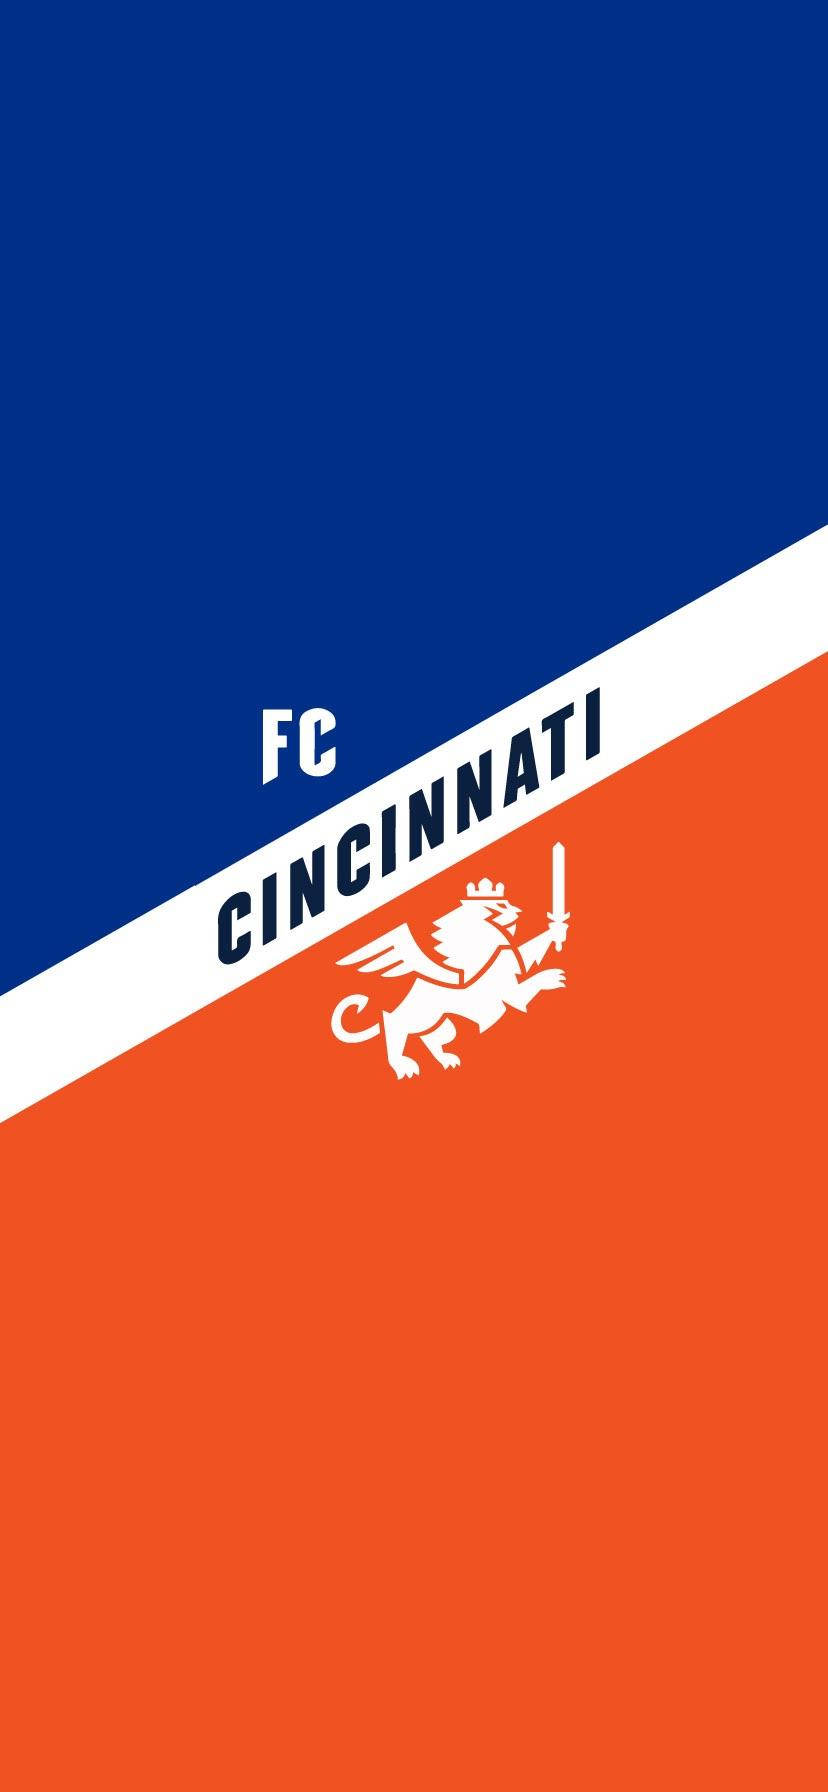 Fc Cincinnati In Blue And Orange Wallpaper